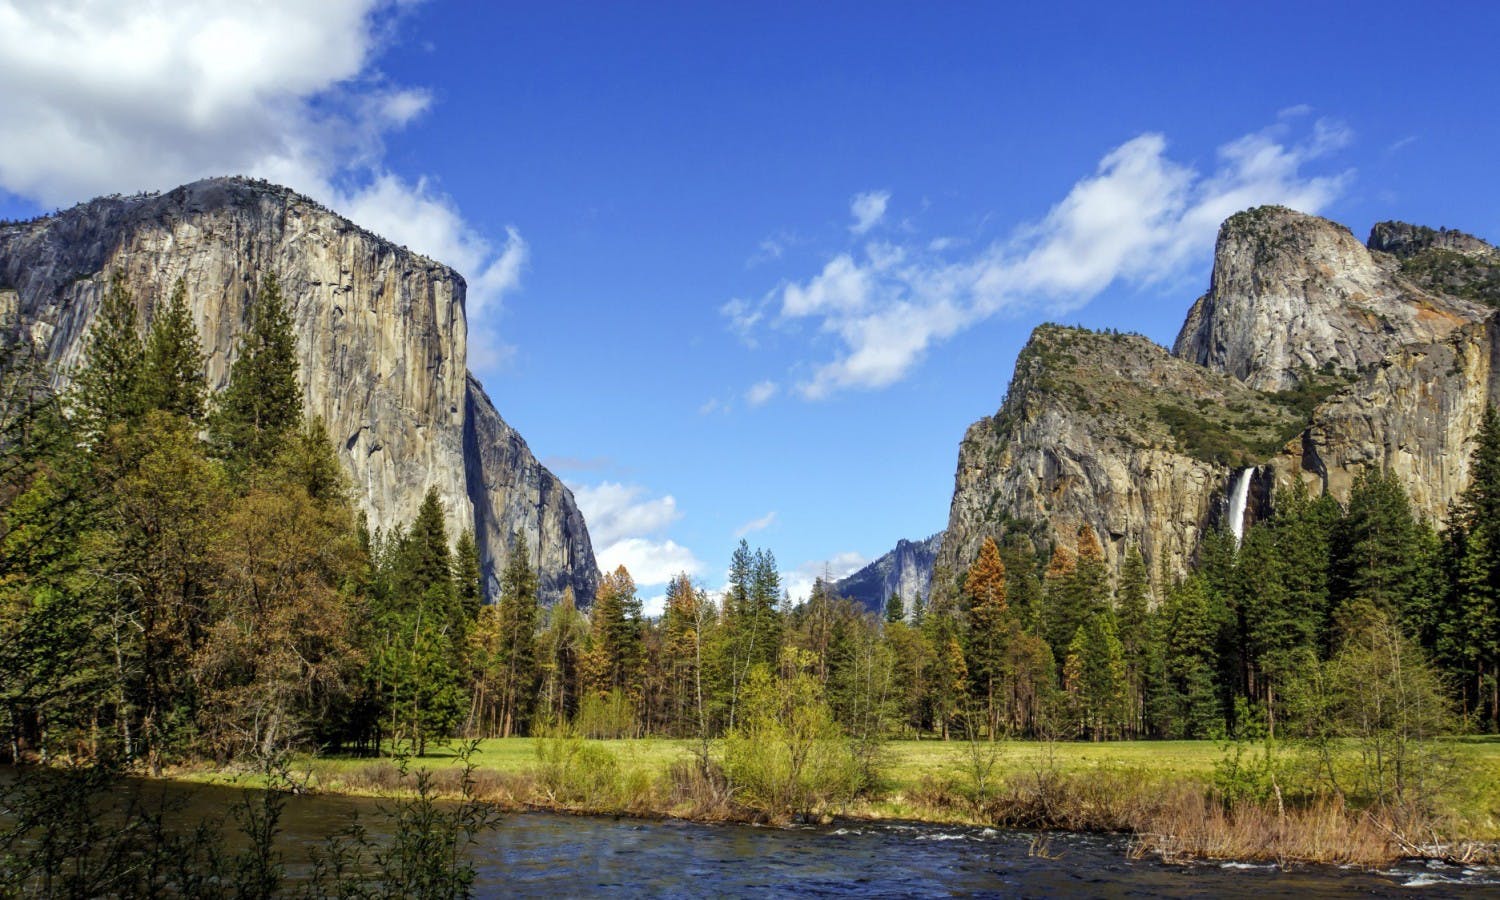 Totale Yosemite-ervaring met gigantische sequoia's-tour